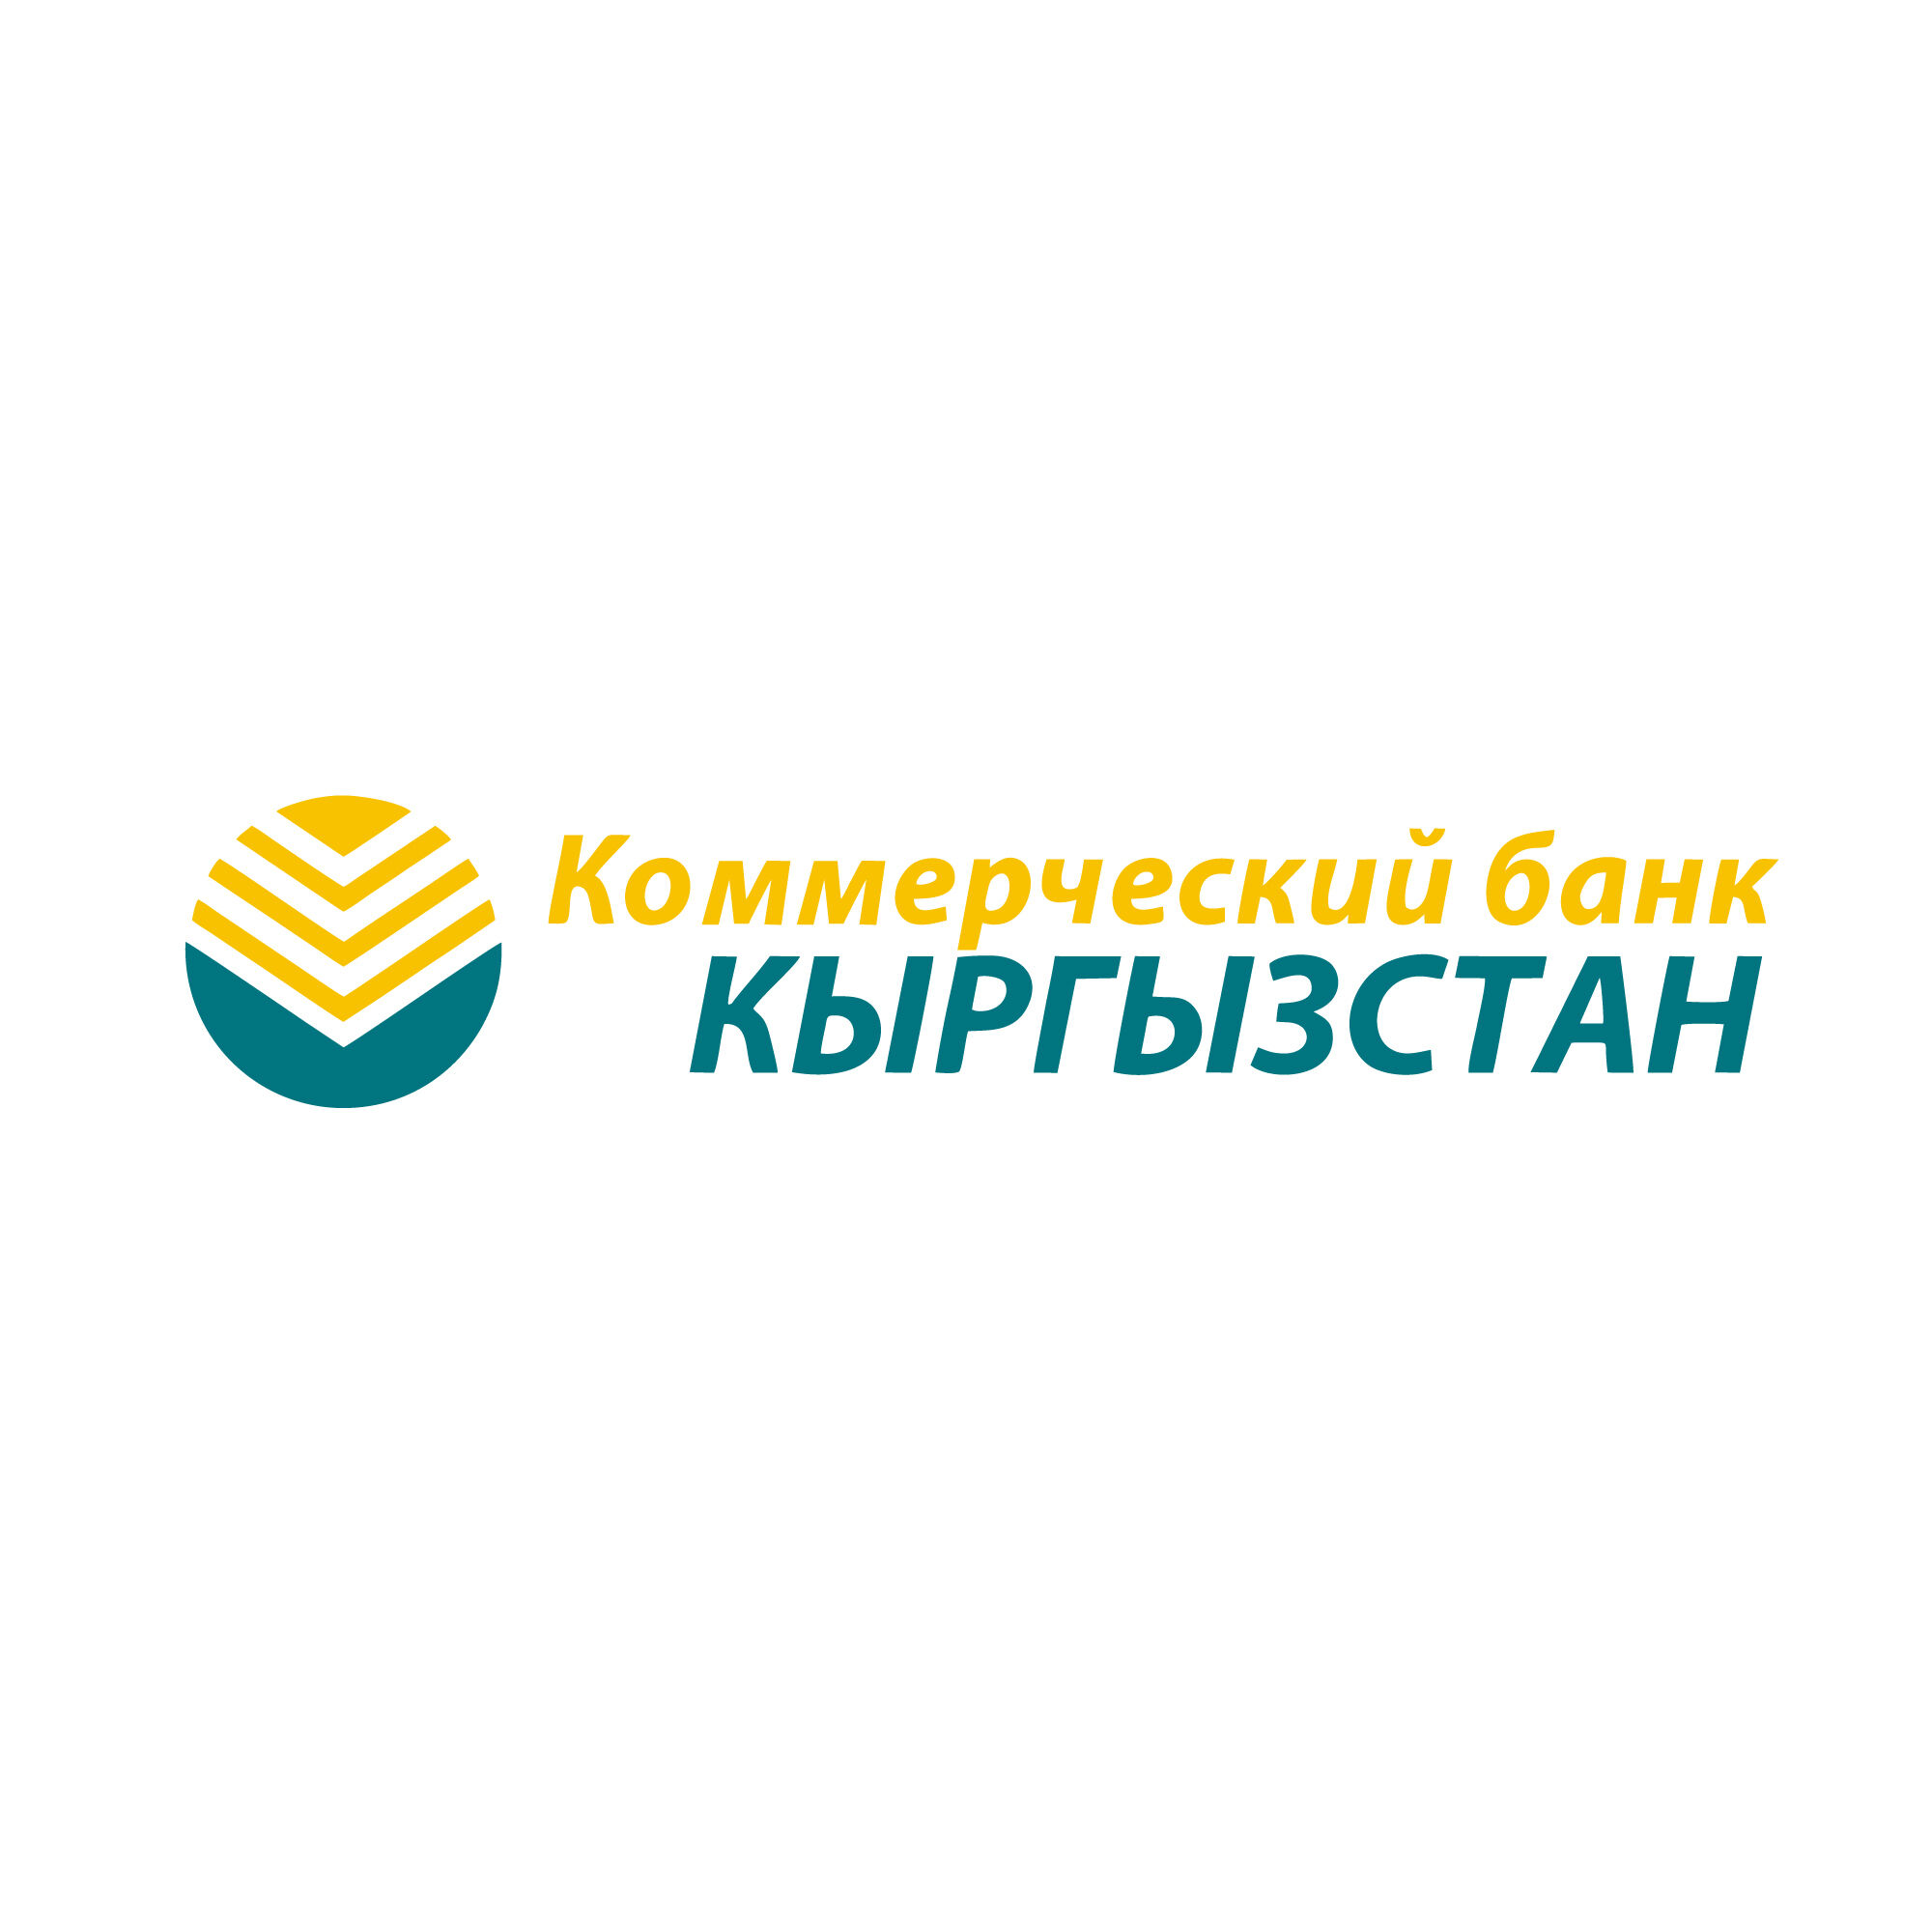 Bank kyrgyzstan. Коммерческий банк Кыргызстан logo. Коммерческий банк Кыргызстан MBANK. АКБ Кыргызстан банк. Эмблемы банков Кыргызстана.